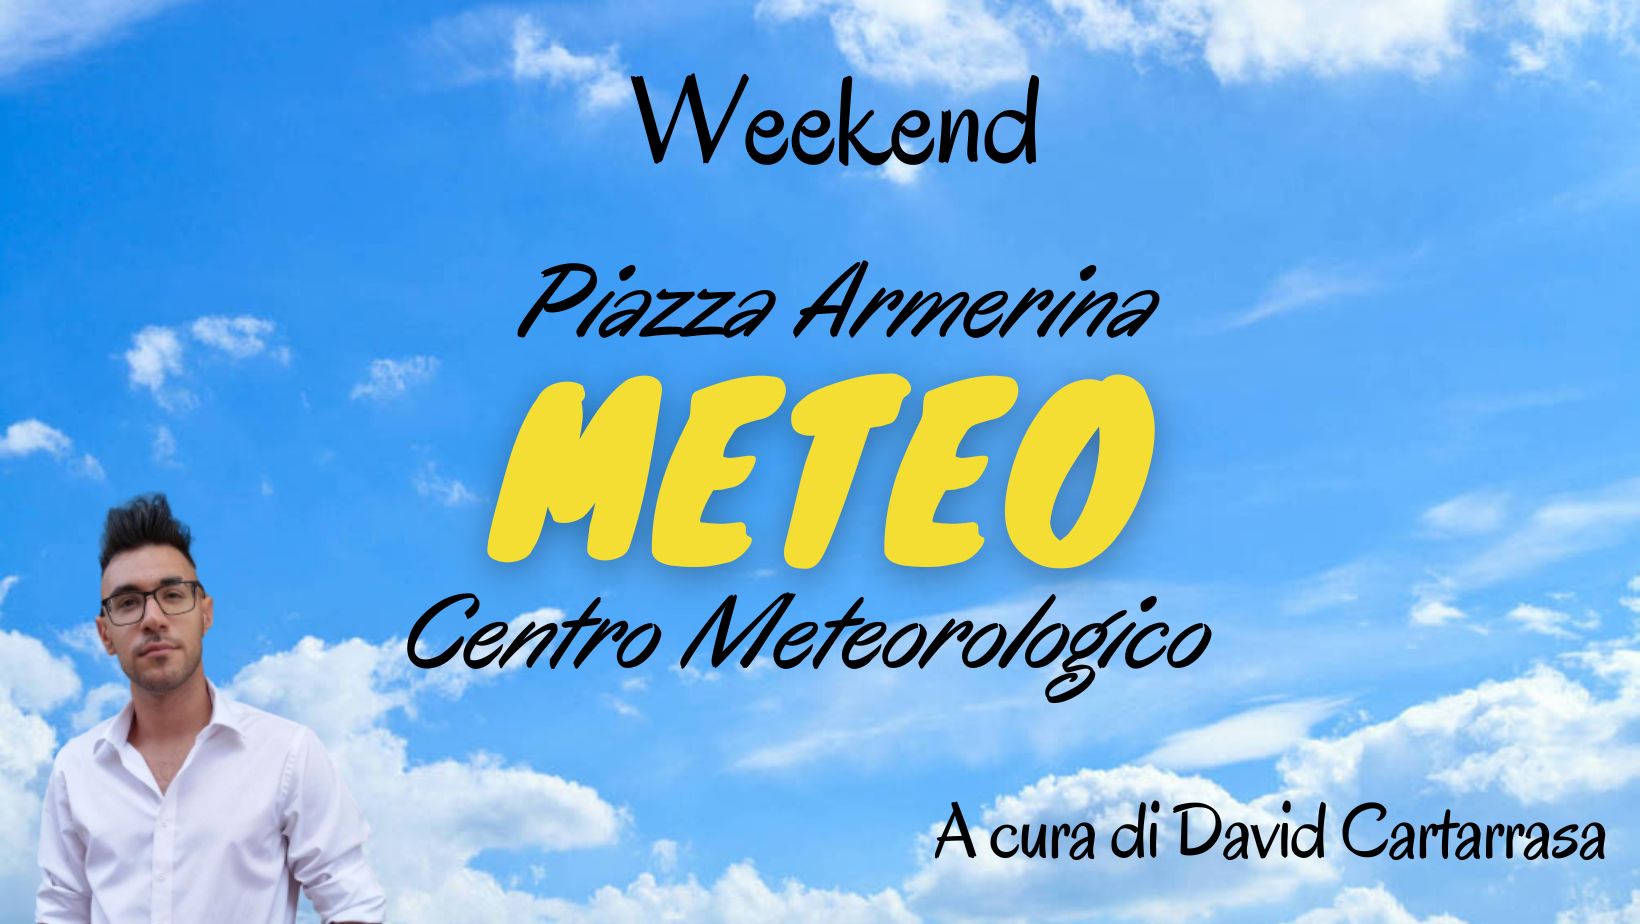 Meteo Piazza Armerina  : weekend nuvoloso e temperature in aumento